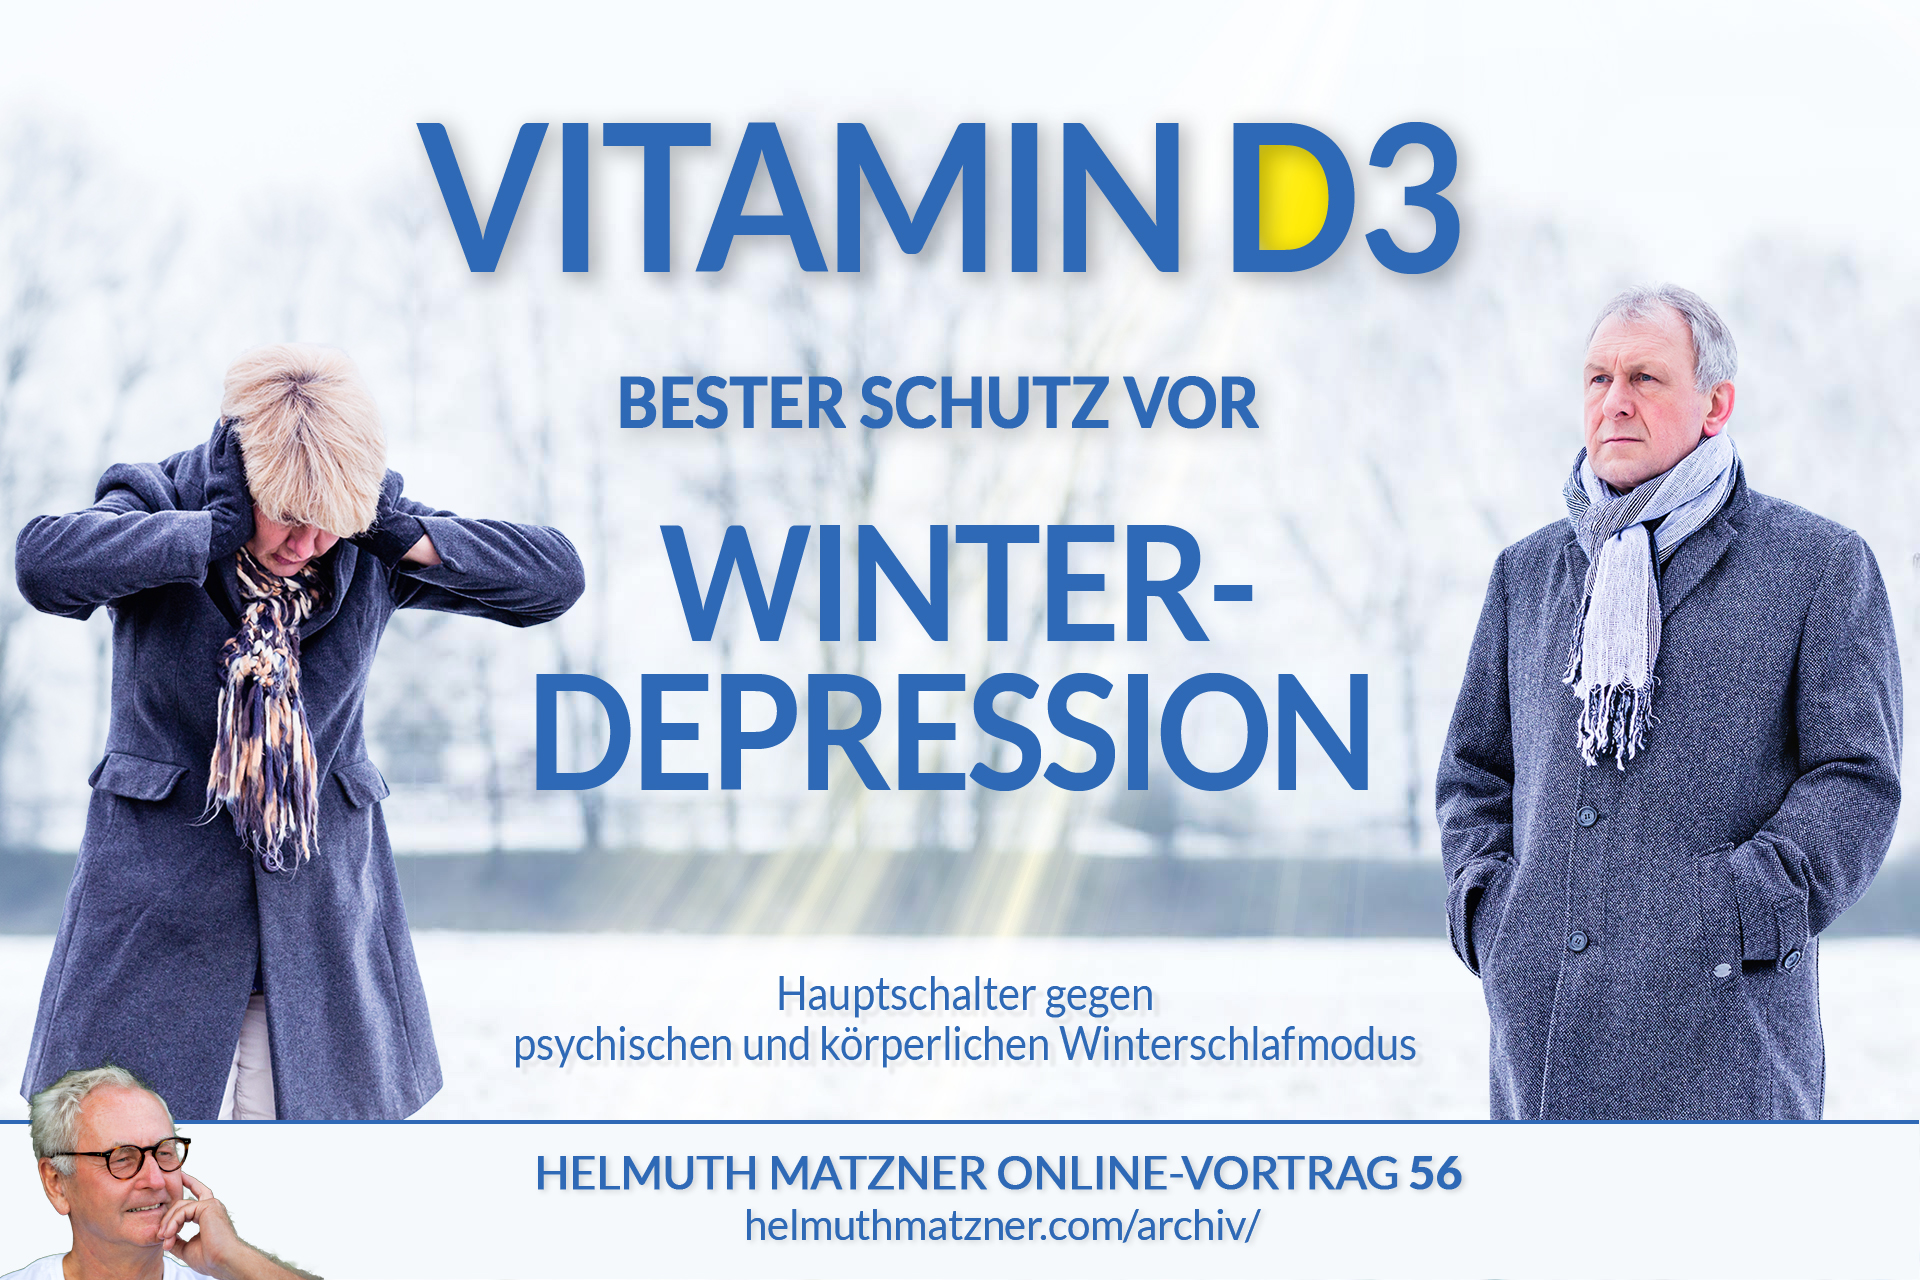 Helmuth Matzner - Online-Vortrag 56 - Vitamin D3 - Winterdepression - ARCHIV v05B